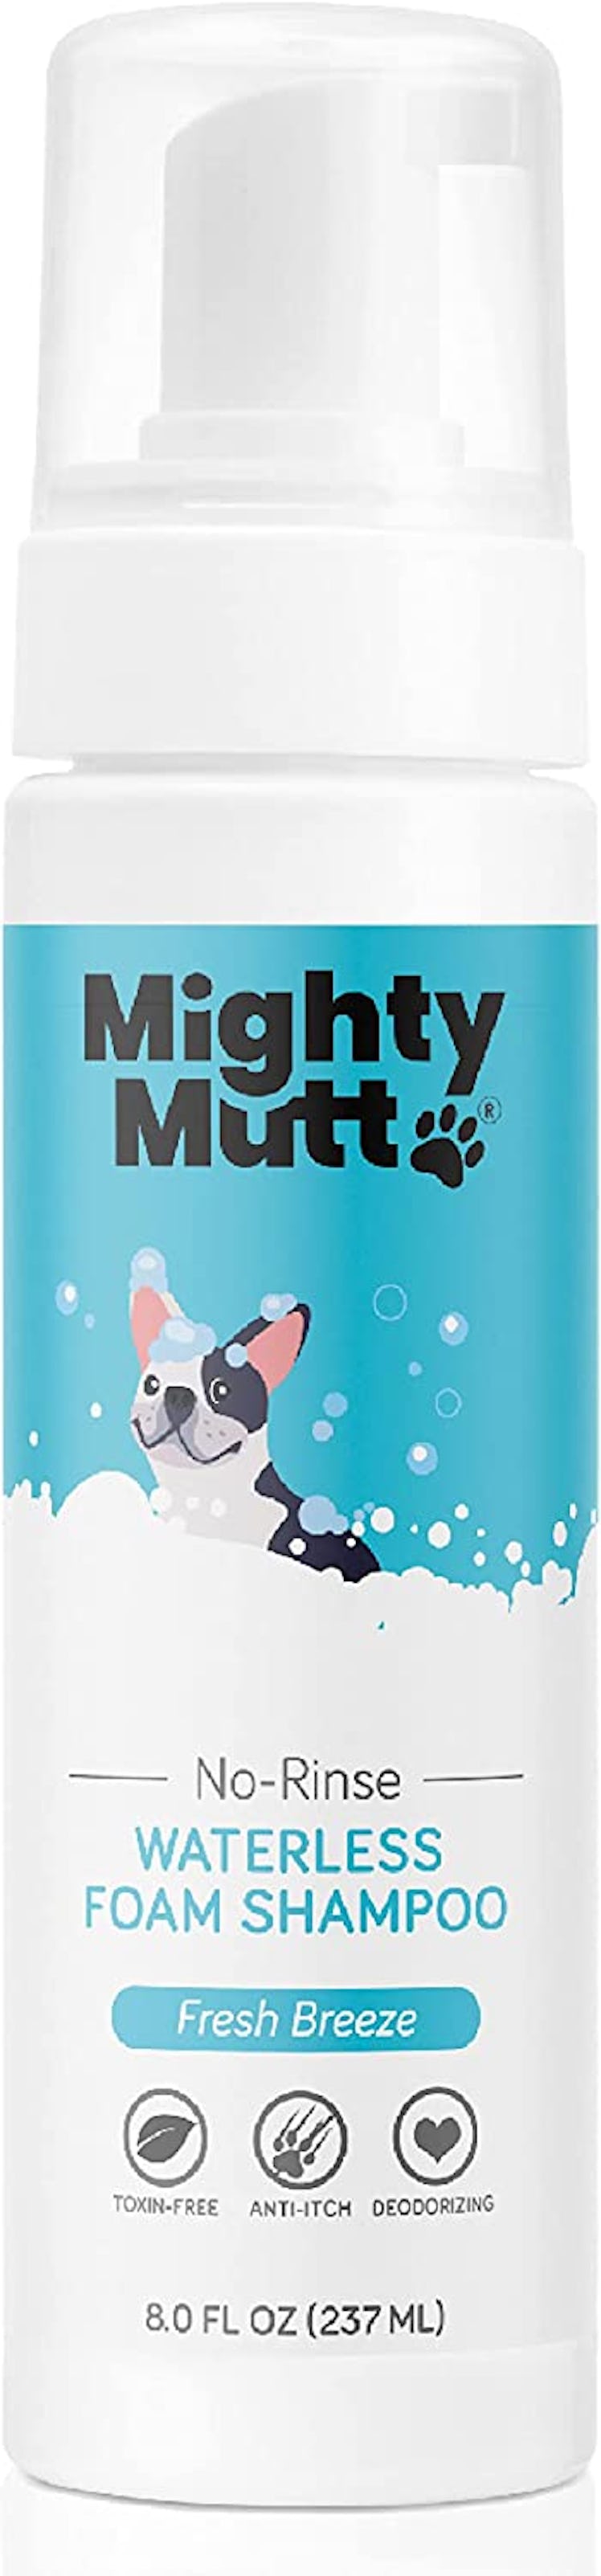 Mighty Mutt Waterless No-Rinse Dry Shampoo Foam